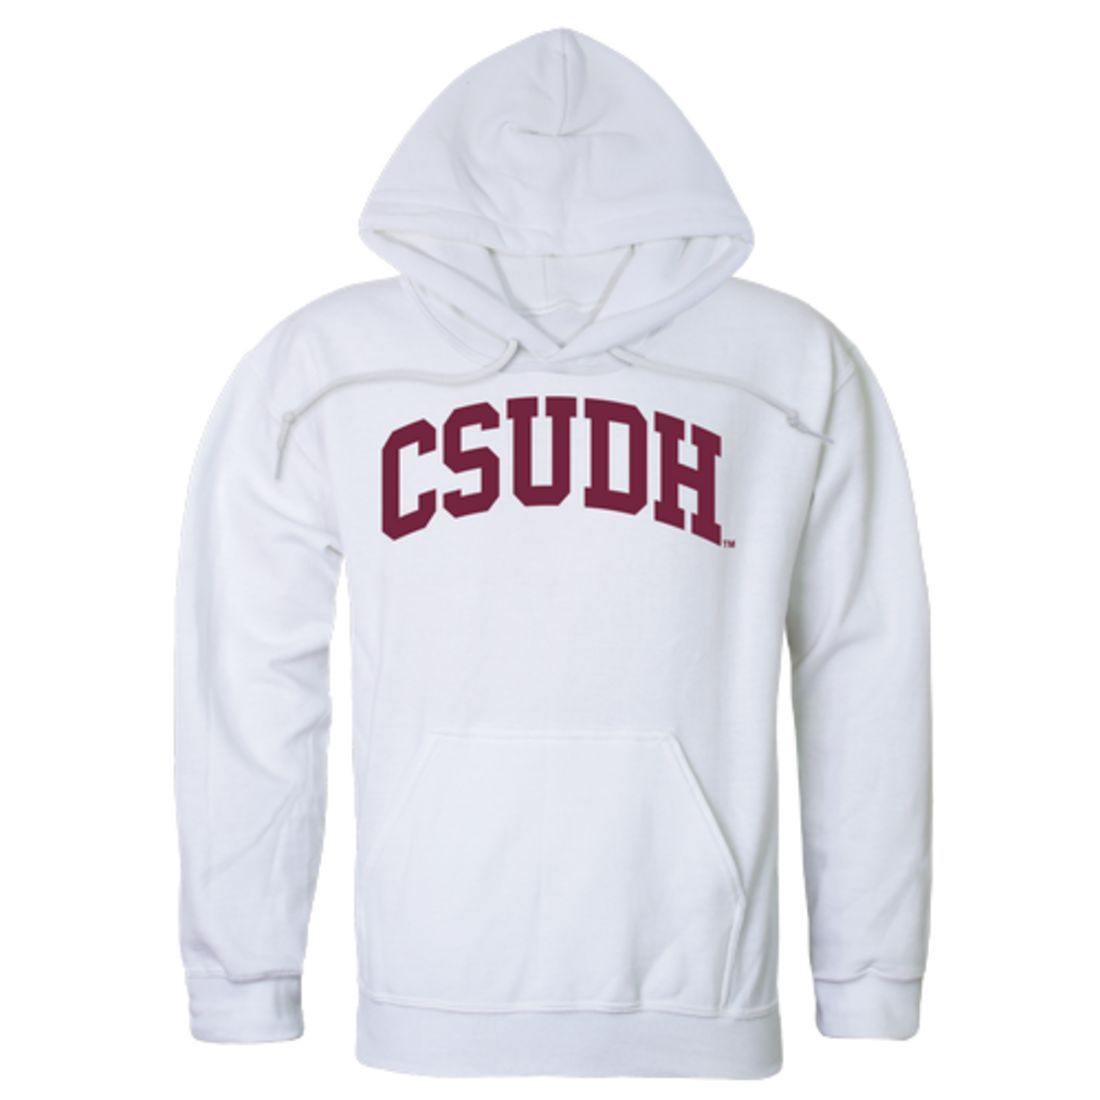 CSUDH California State University Dominguez Hills Toros College Hoodie Sweatshirt White-Campus-Wardrobe